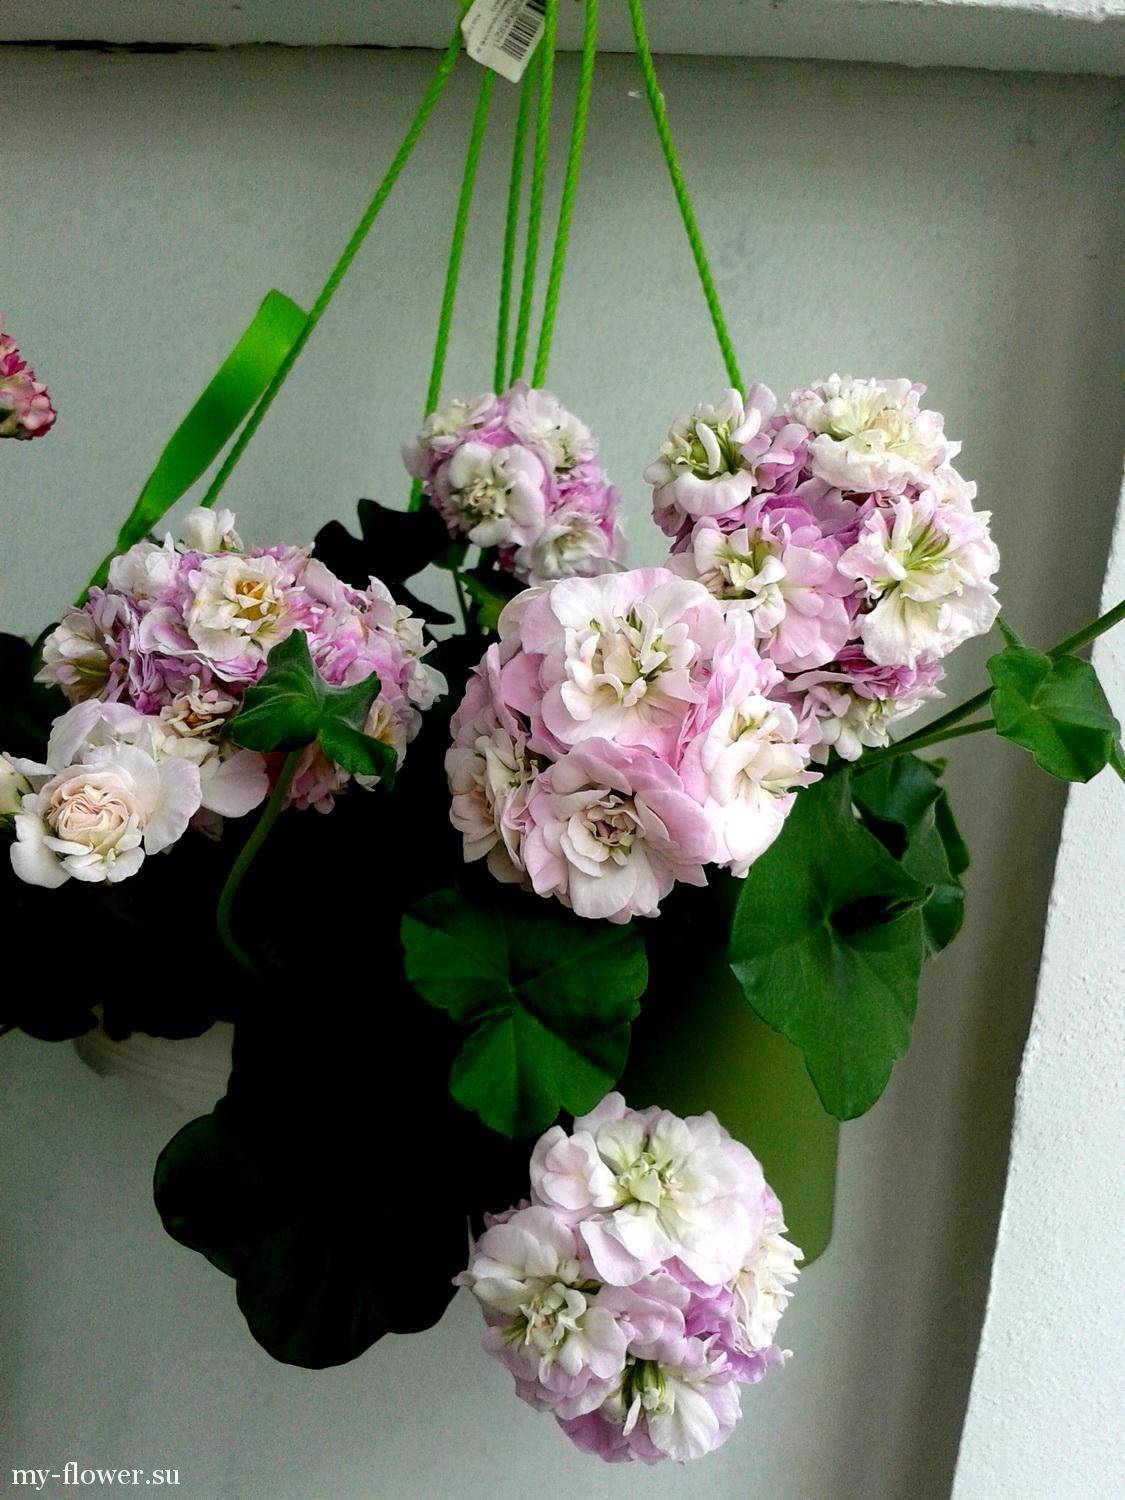 Пеларгония пак вива розита - описание сорта и особенности ухода